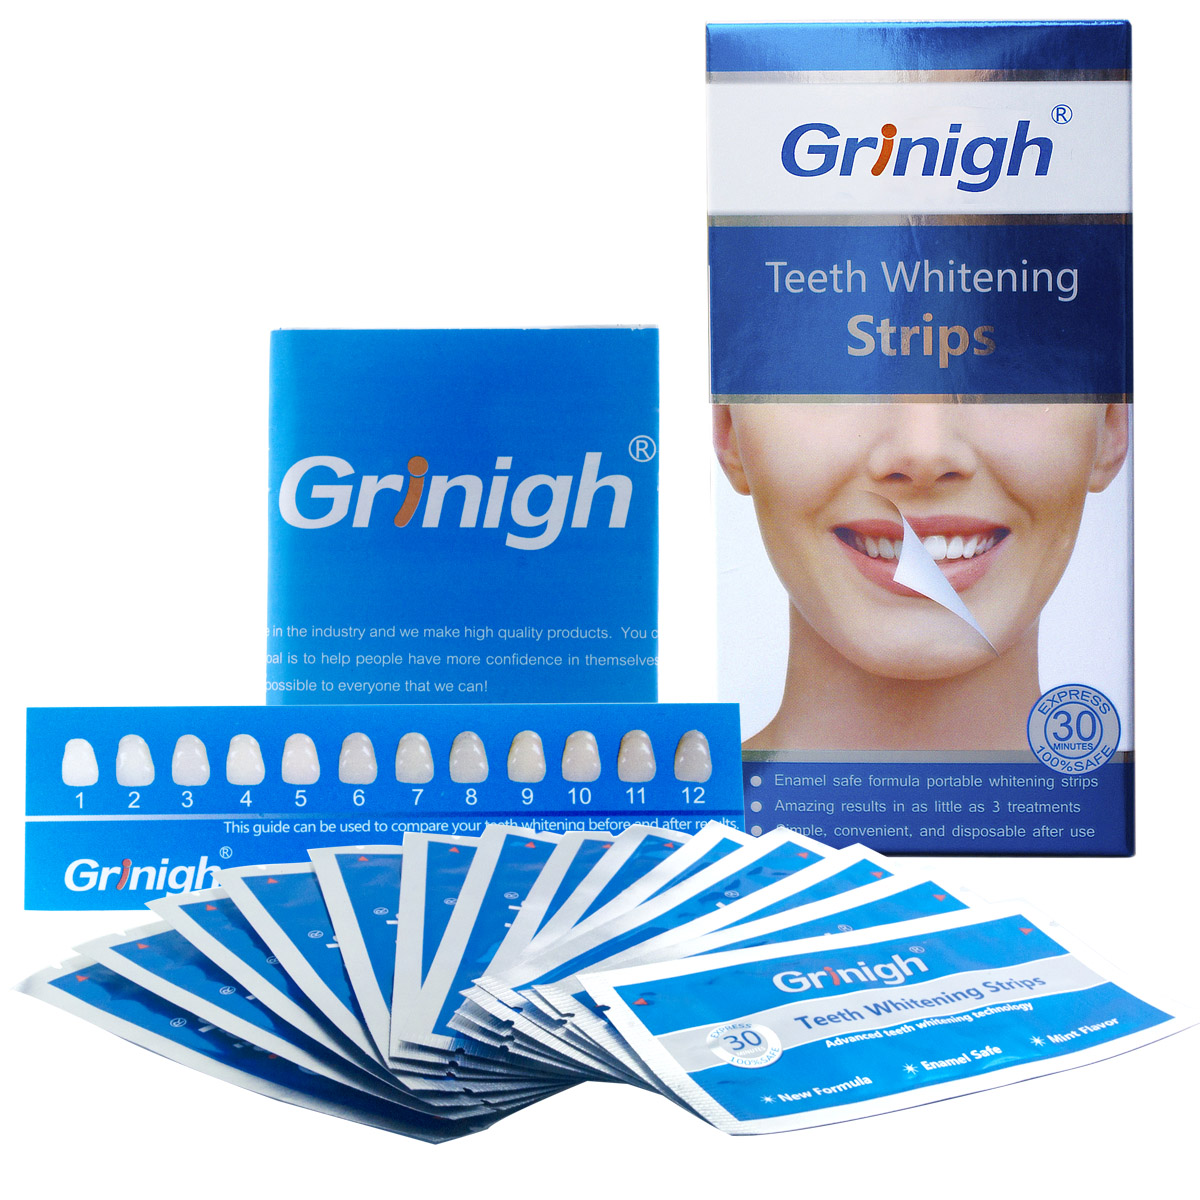 Grin365 Bright Touch Teeth Whitening Strips met verse munt Flavor - 7 behandelingen